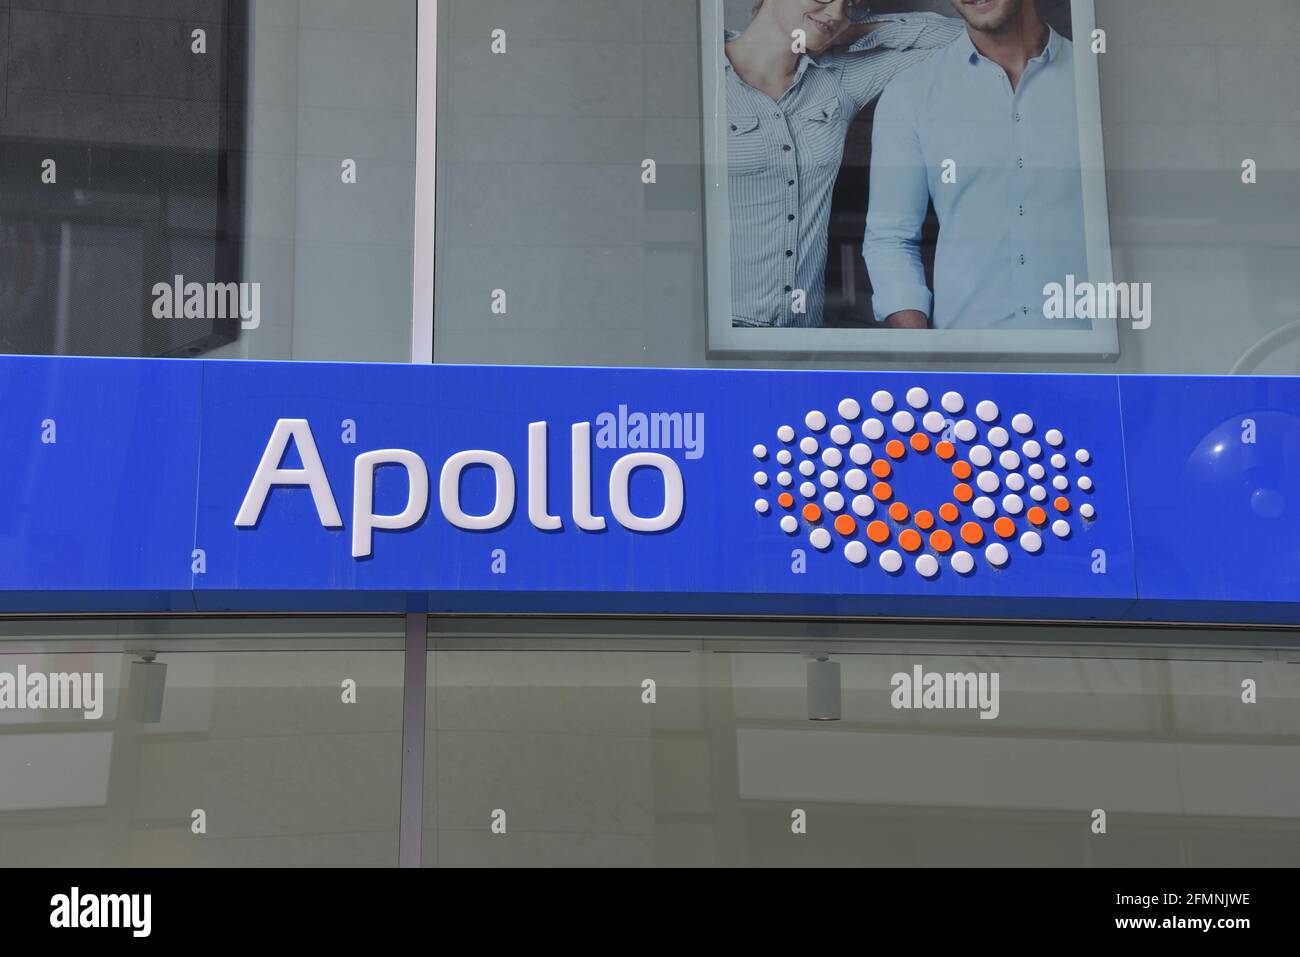 Apollo Optik Stockfotos und -bilder Kaufen - Alamy